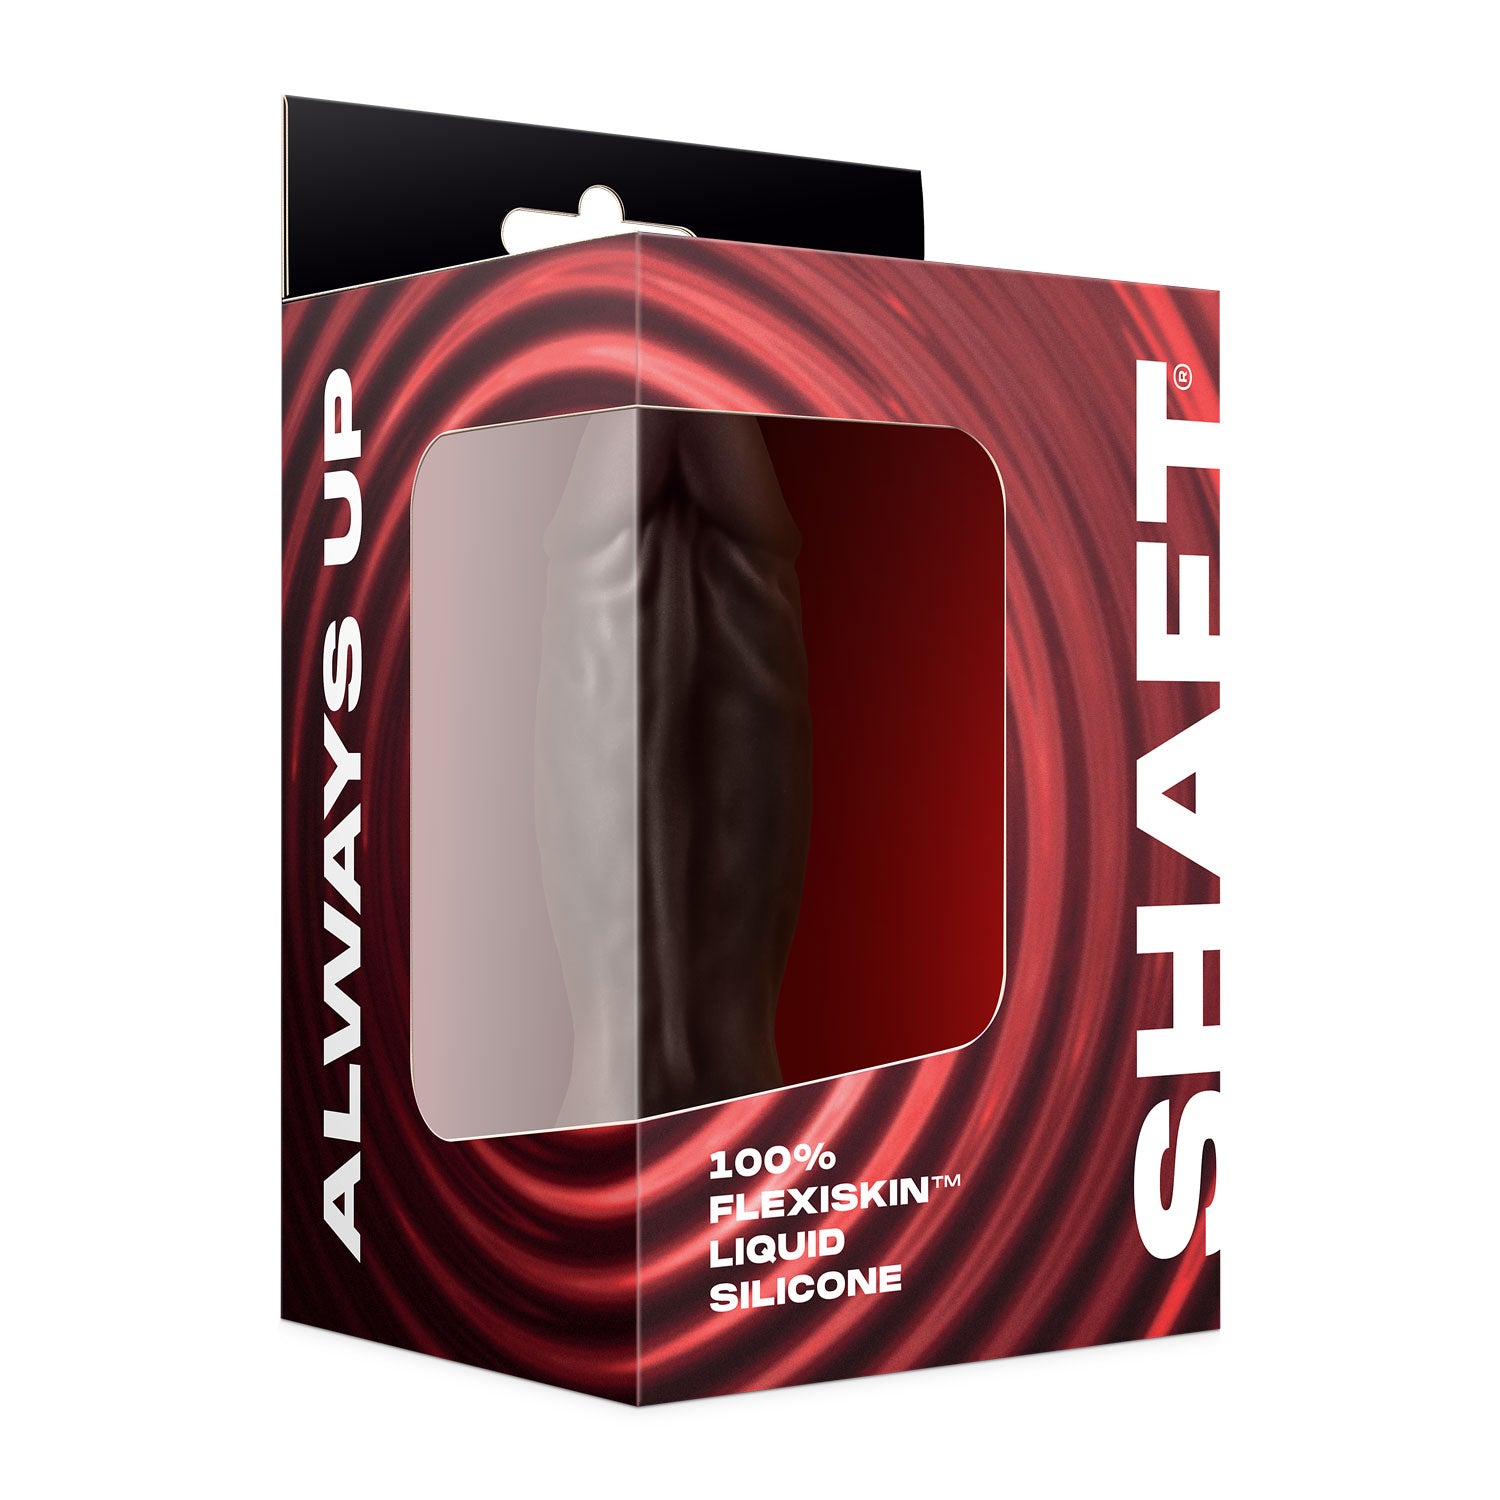 Shaft - Model B 4.3 Inch Liquid Silicone Bullet  Vibrator - Mahogany-1